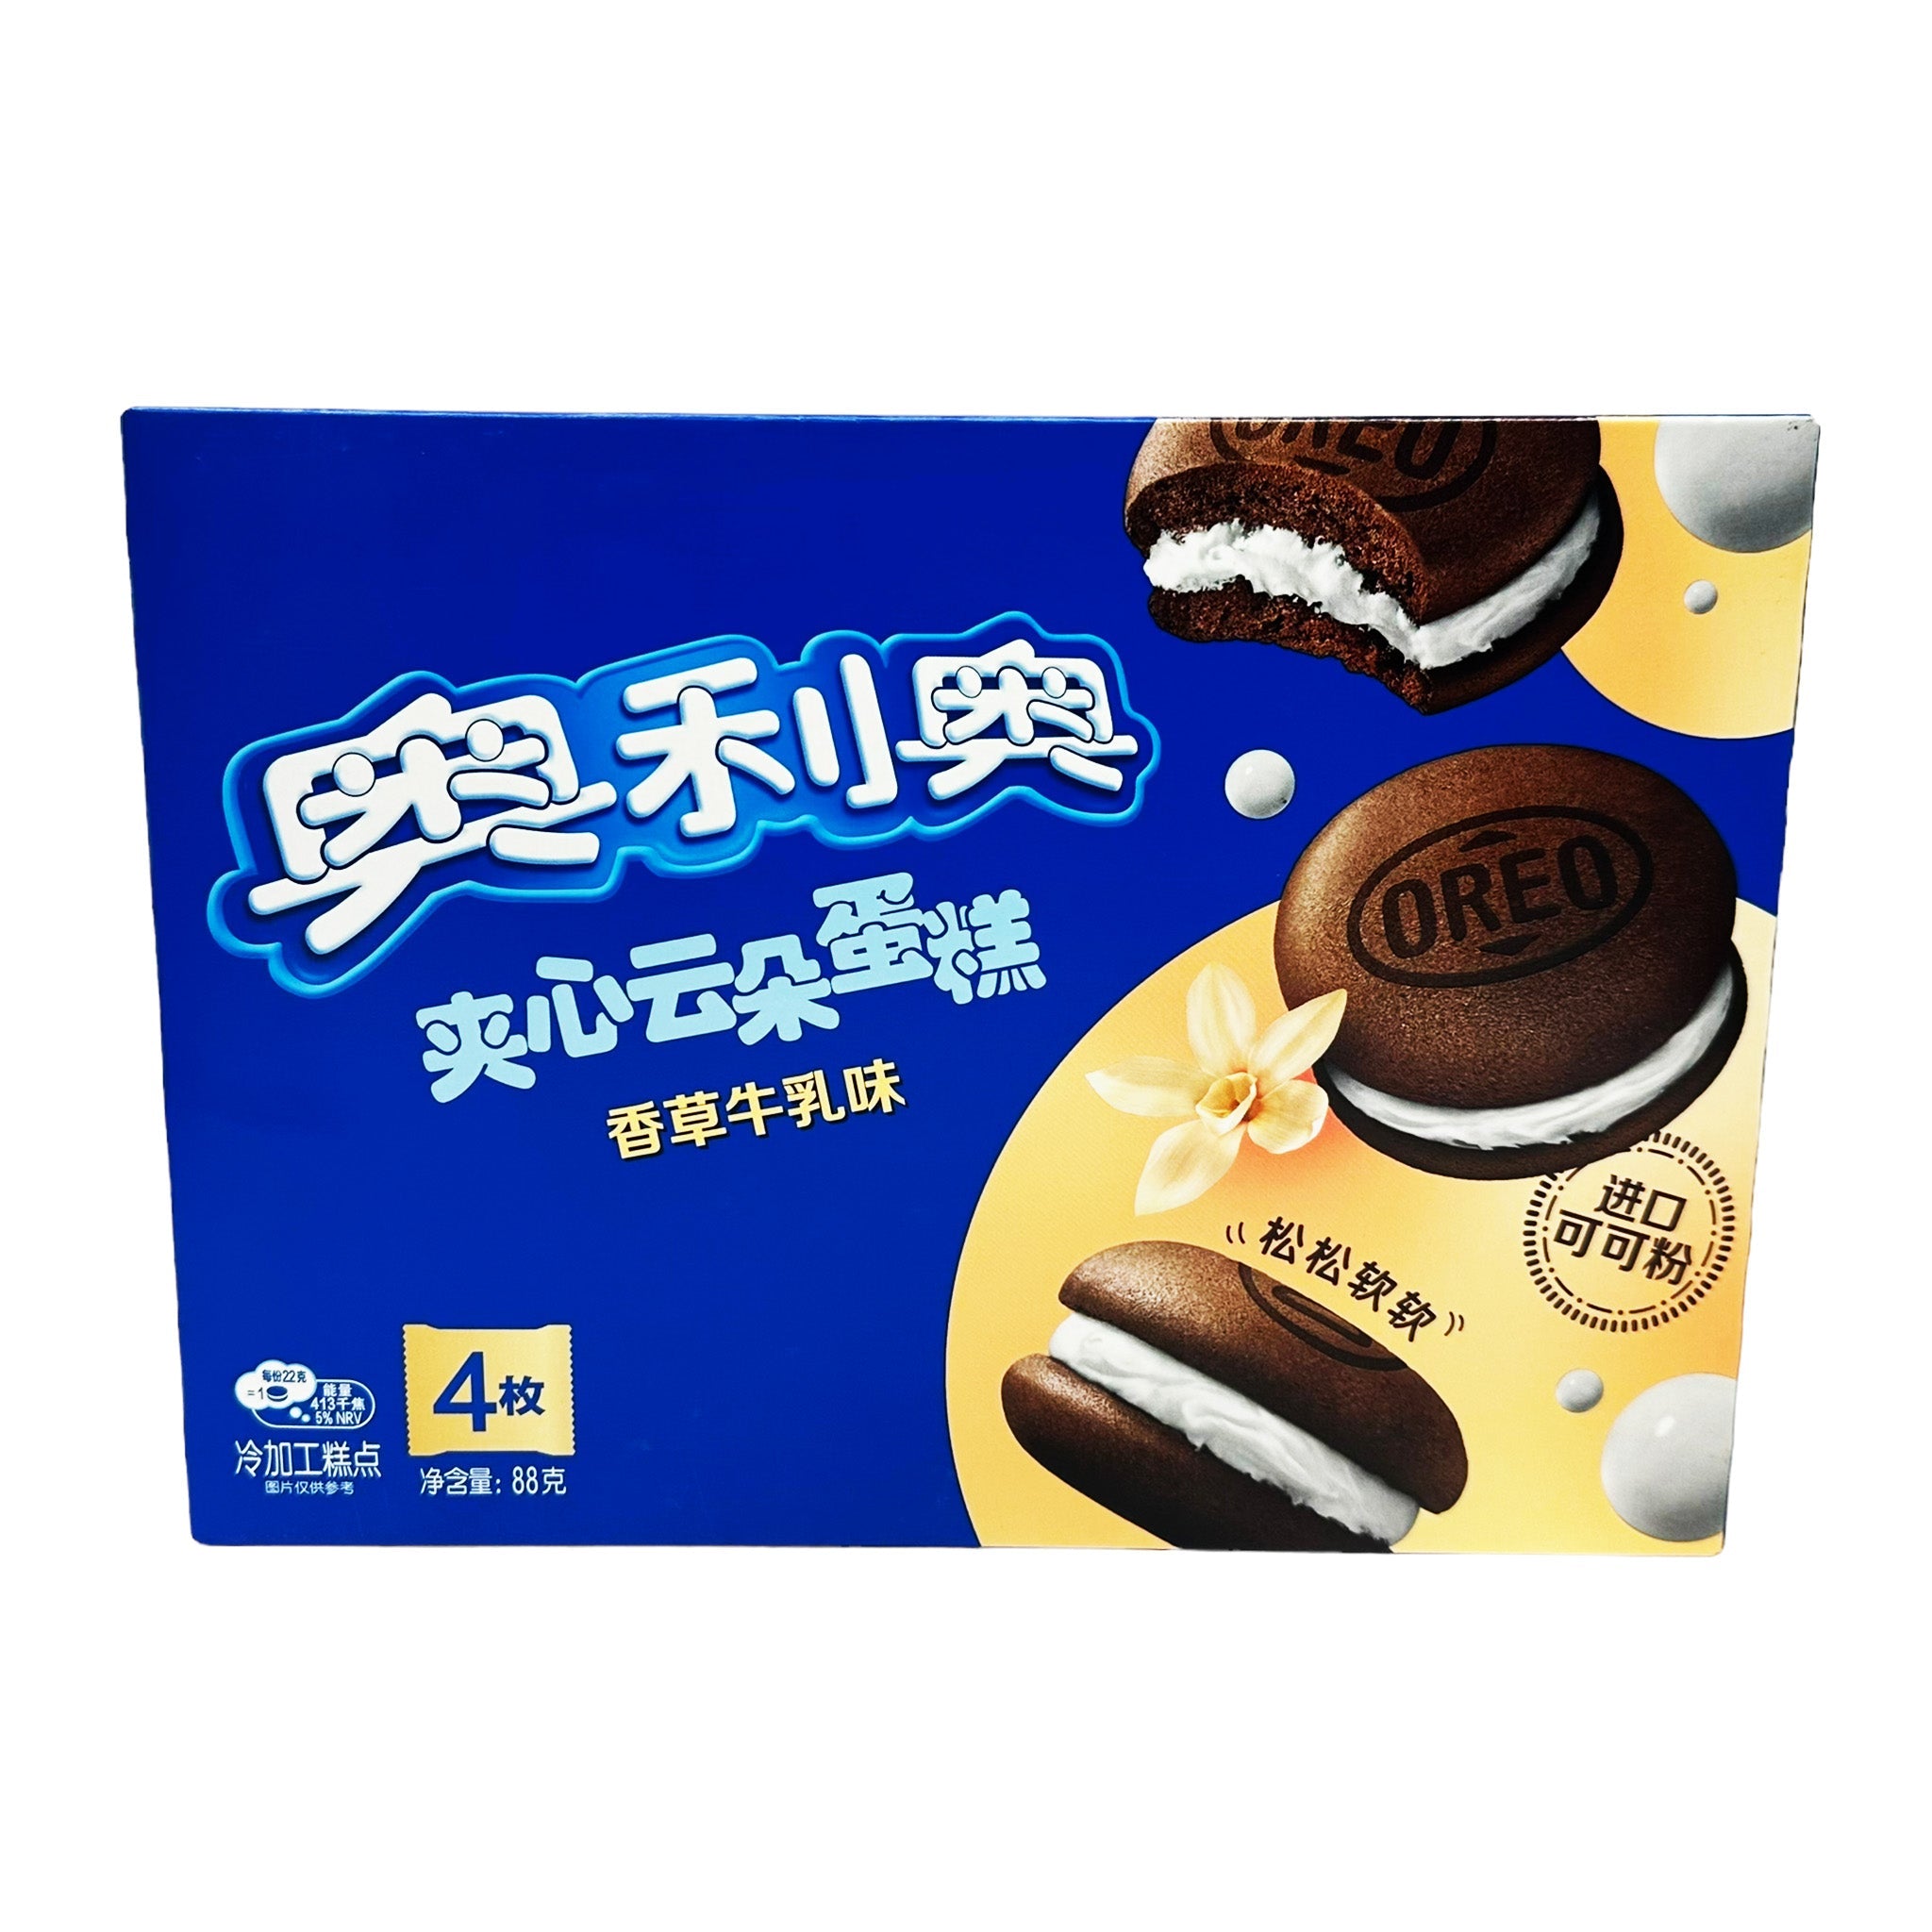 Oreo Vanilla Pudding Cakes - ASIA (16 Count)